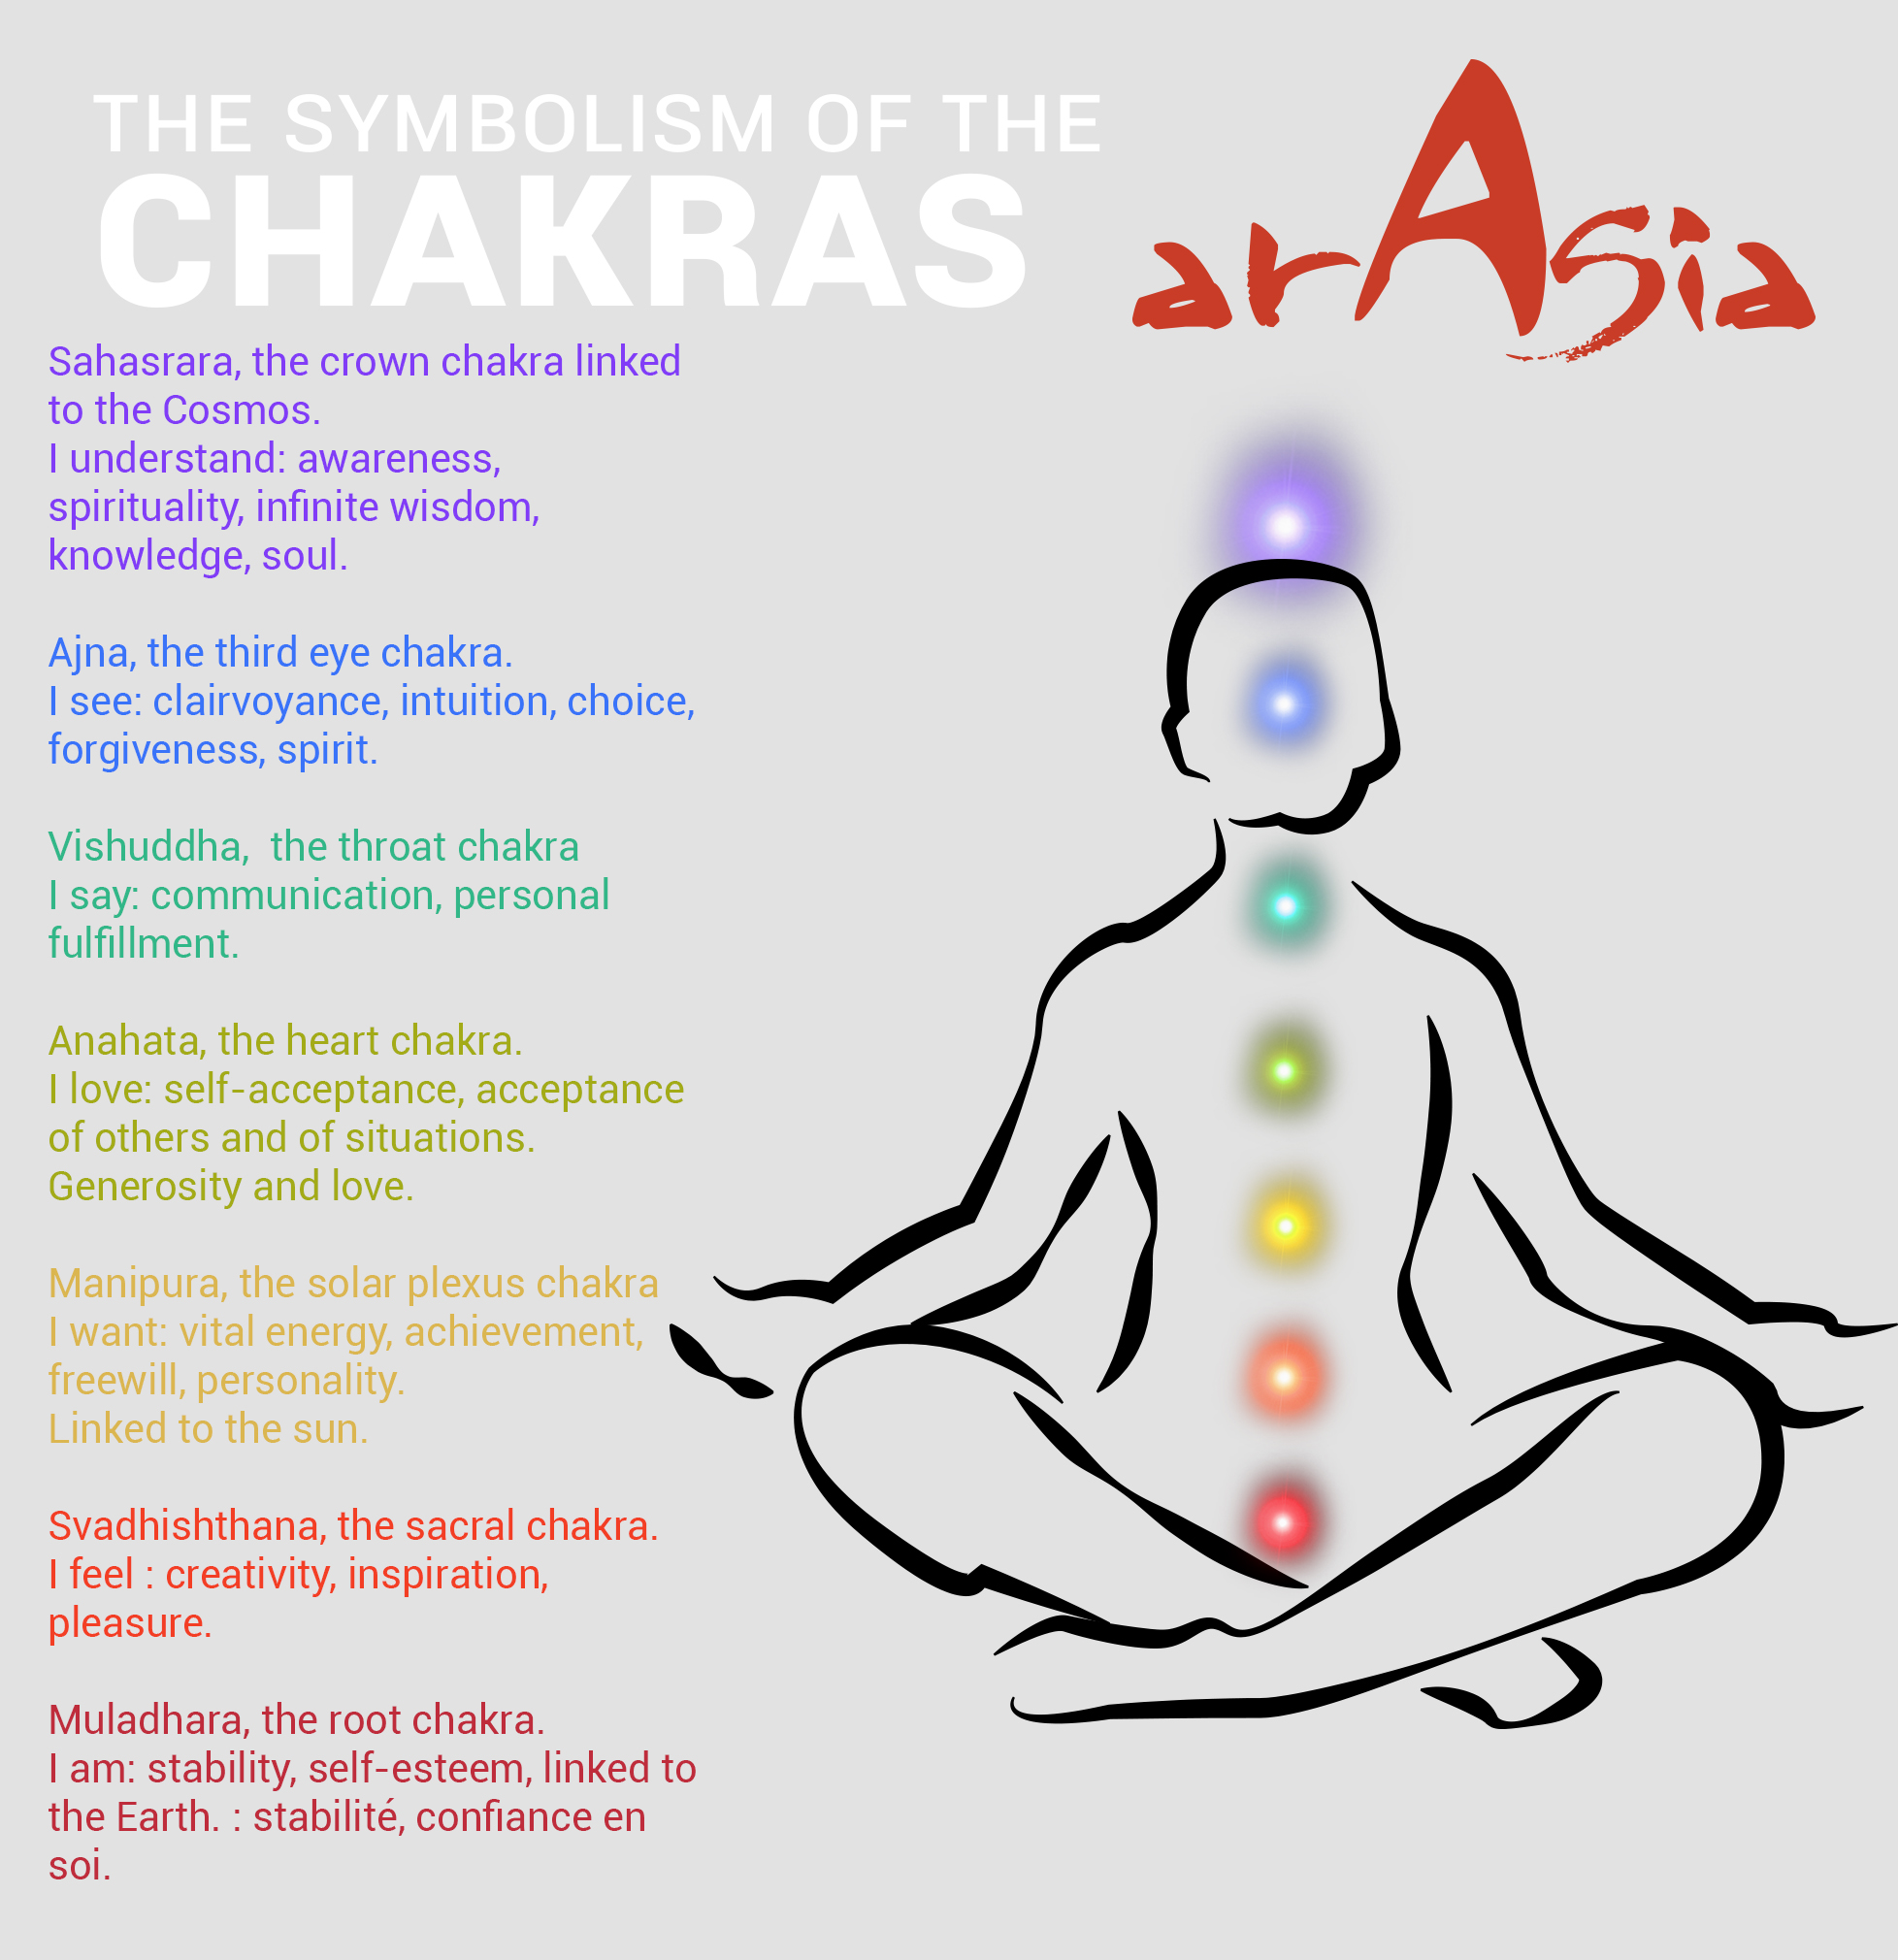 ARASIA : the symbolism of the chakras